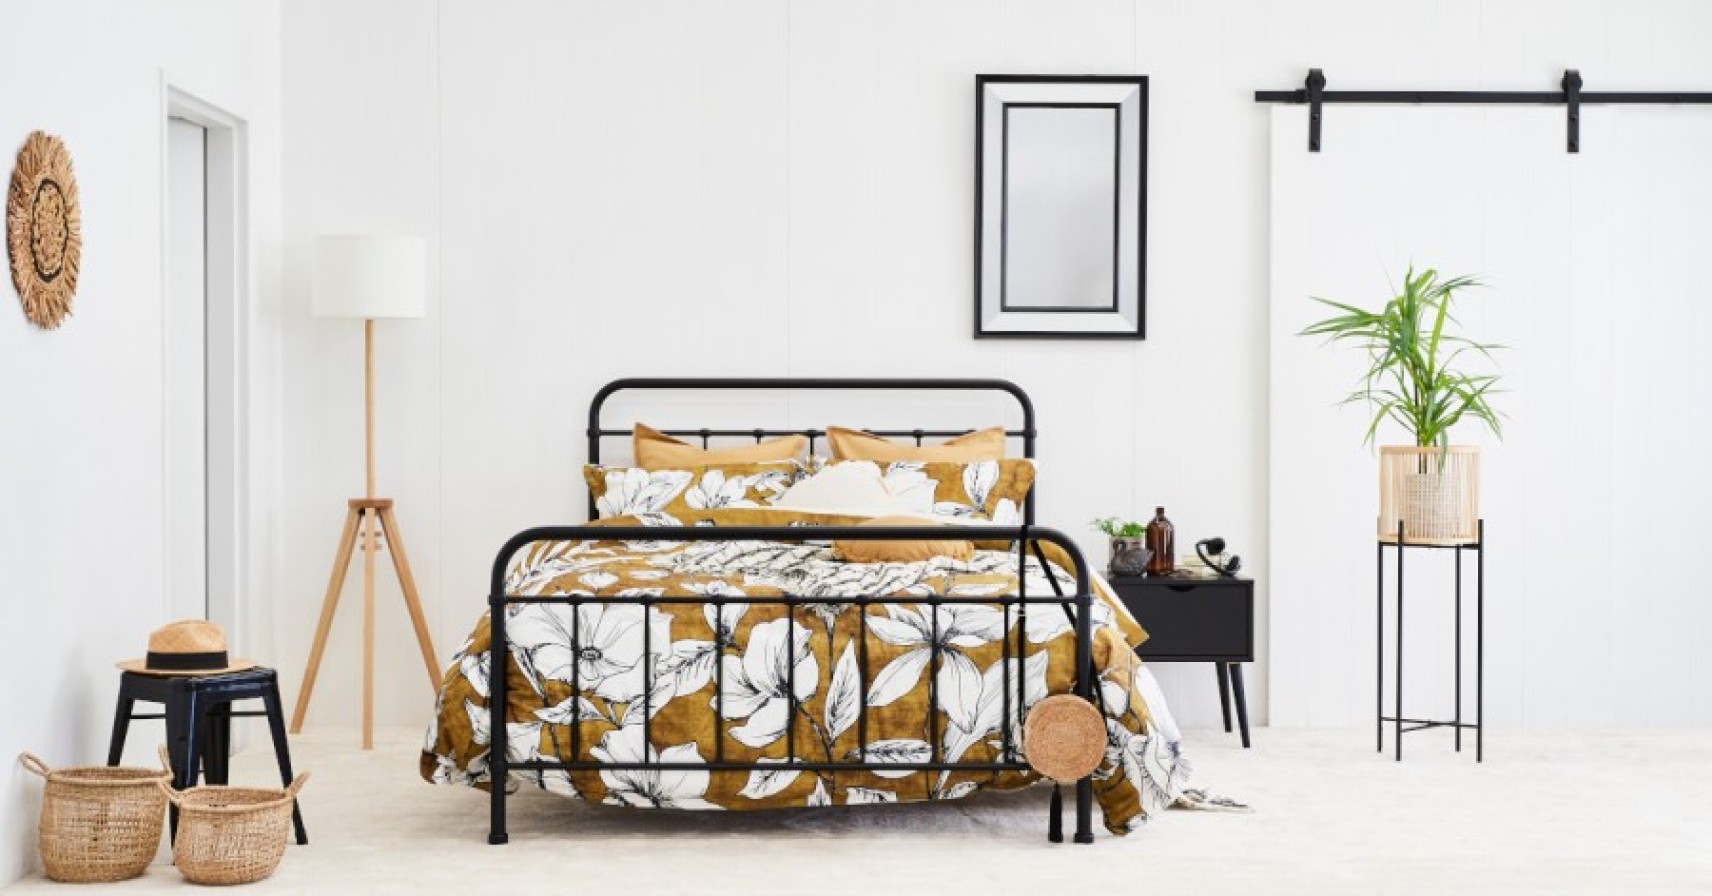 A visually appealing bedroom setup